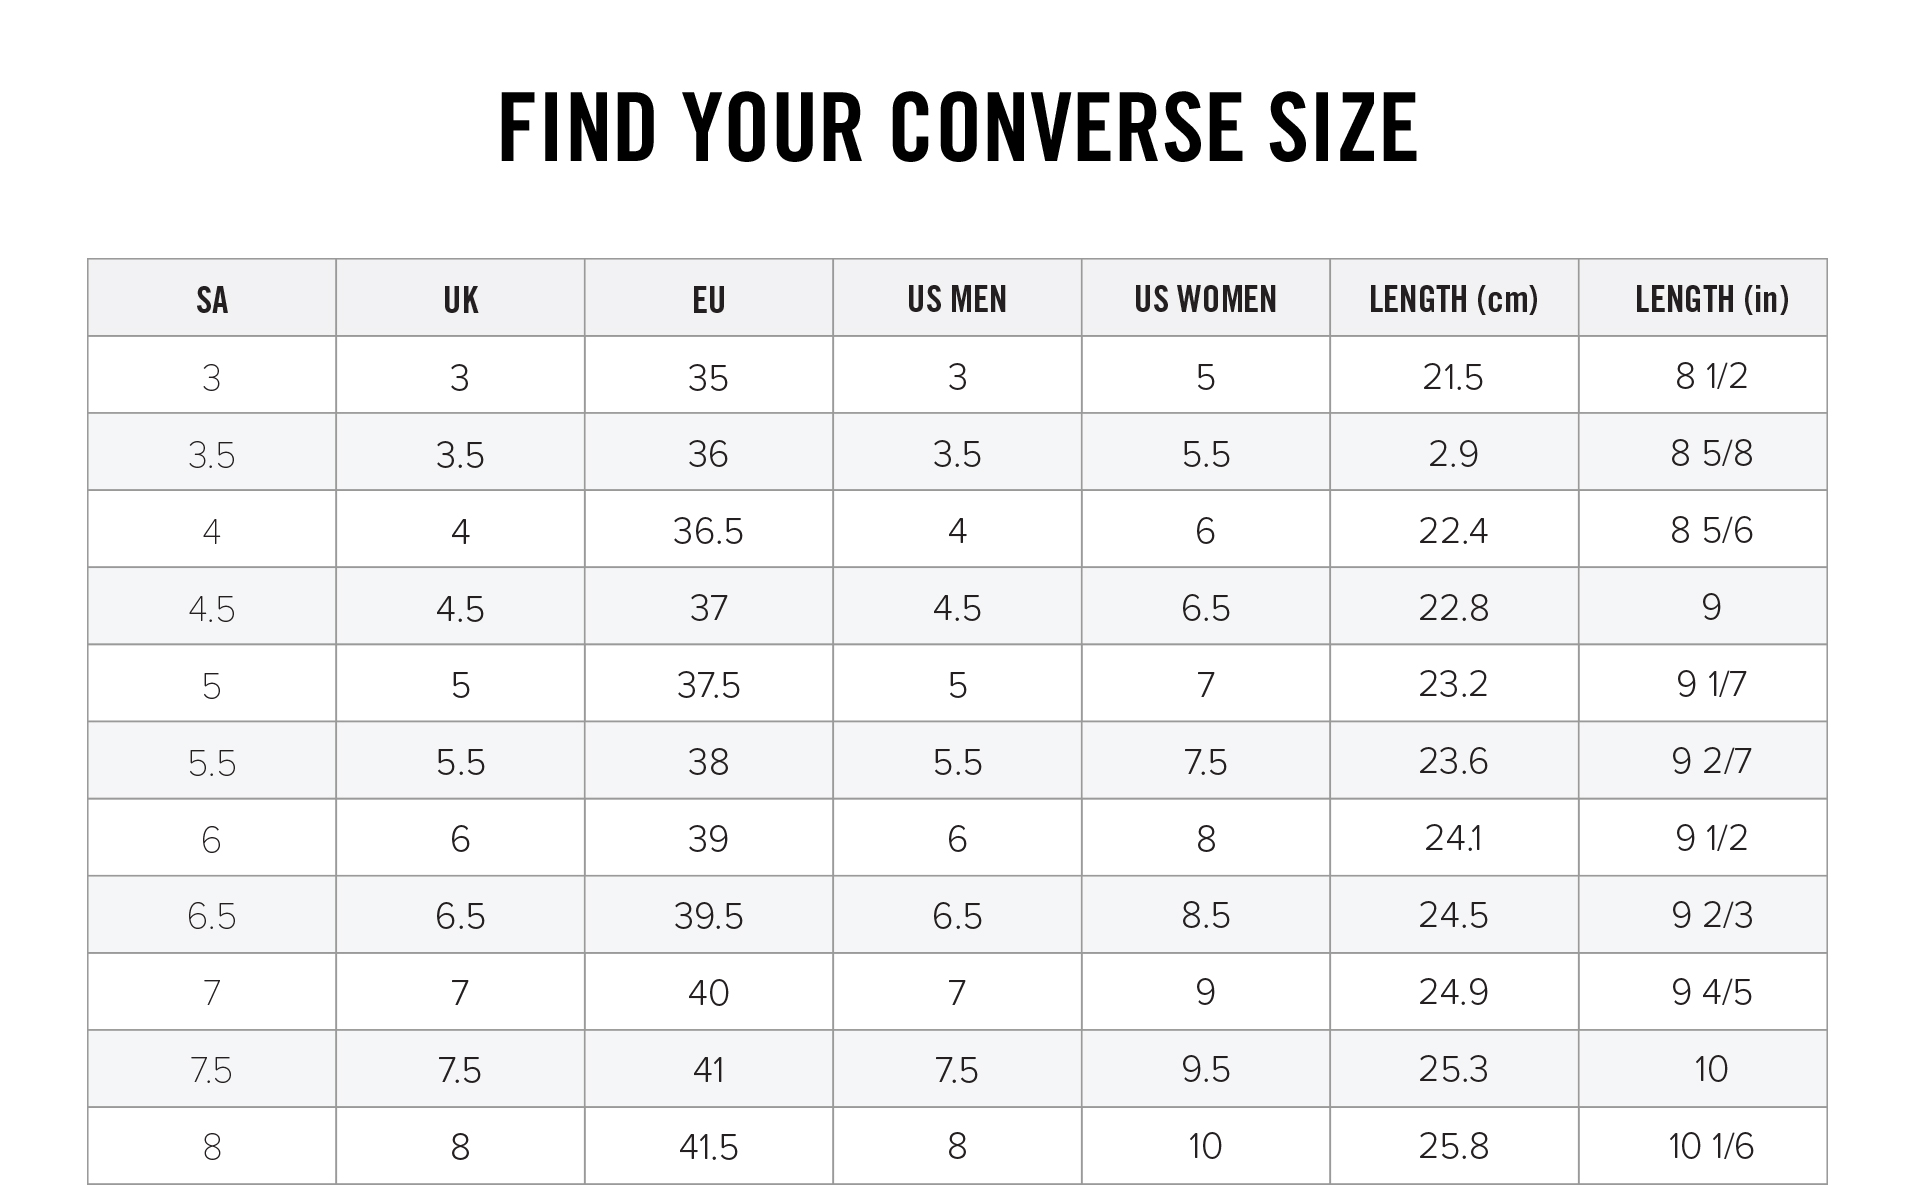 Converse Shoe Size Chart